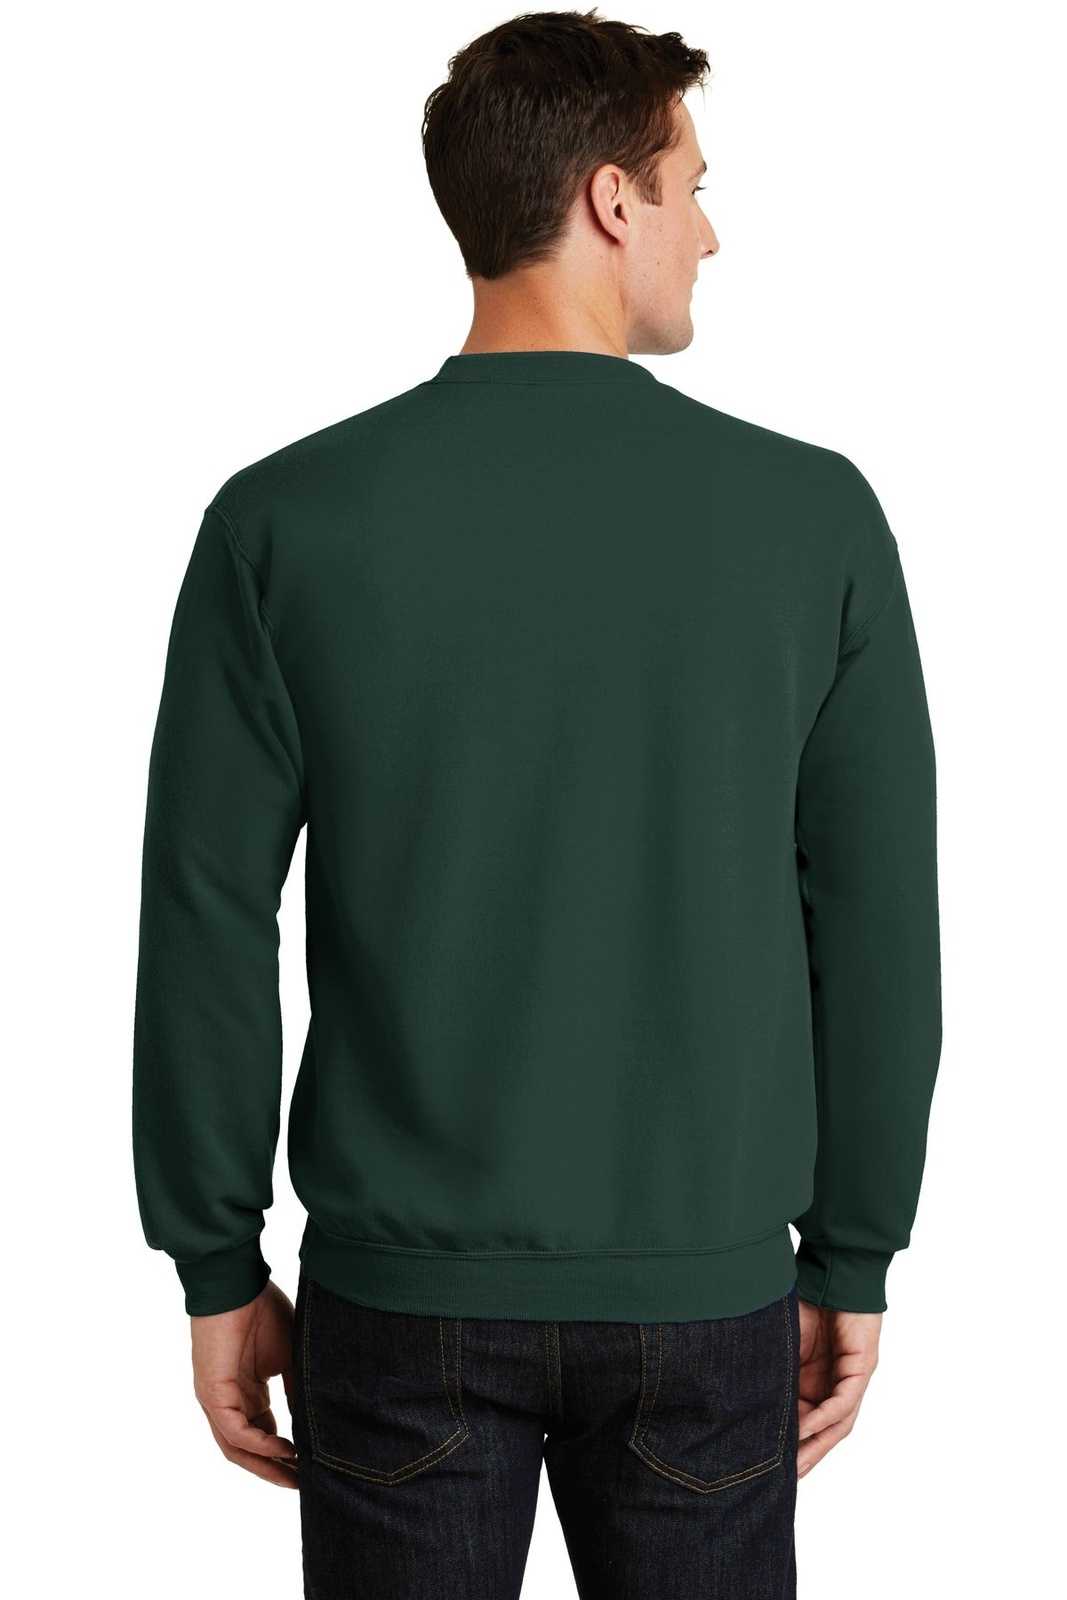 Port & Company PC78 Core Fleece Crewneck Sweatshirt - Dark Green - HIT a Double - 1